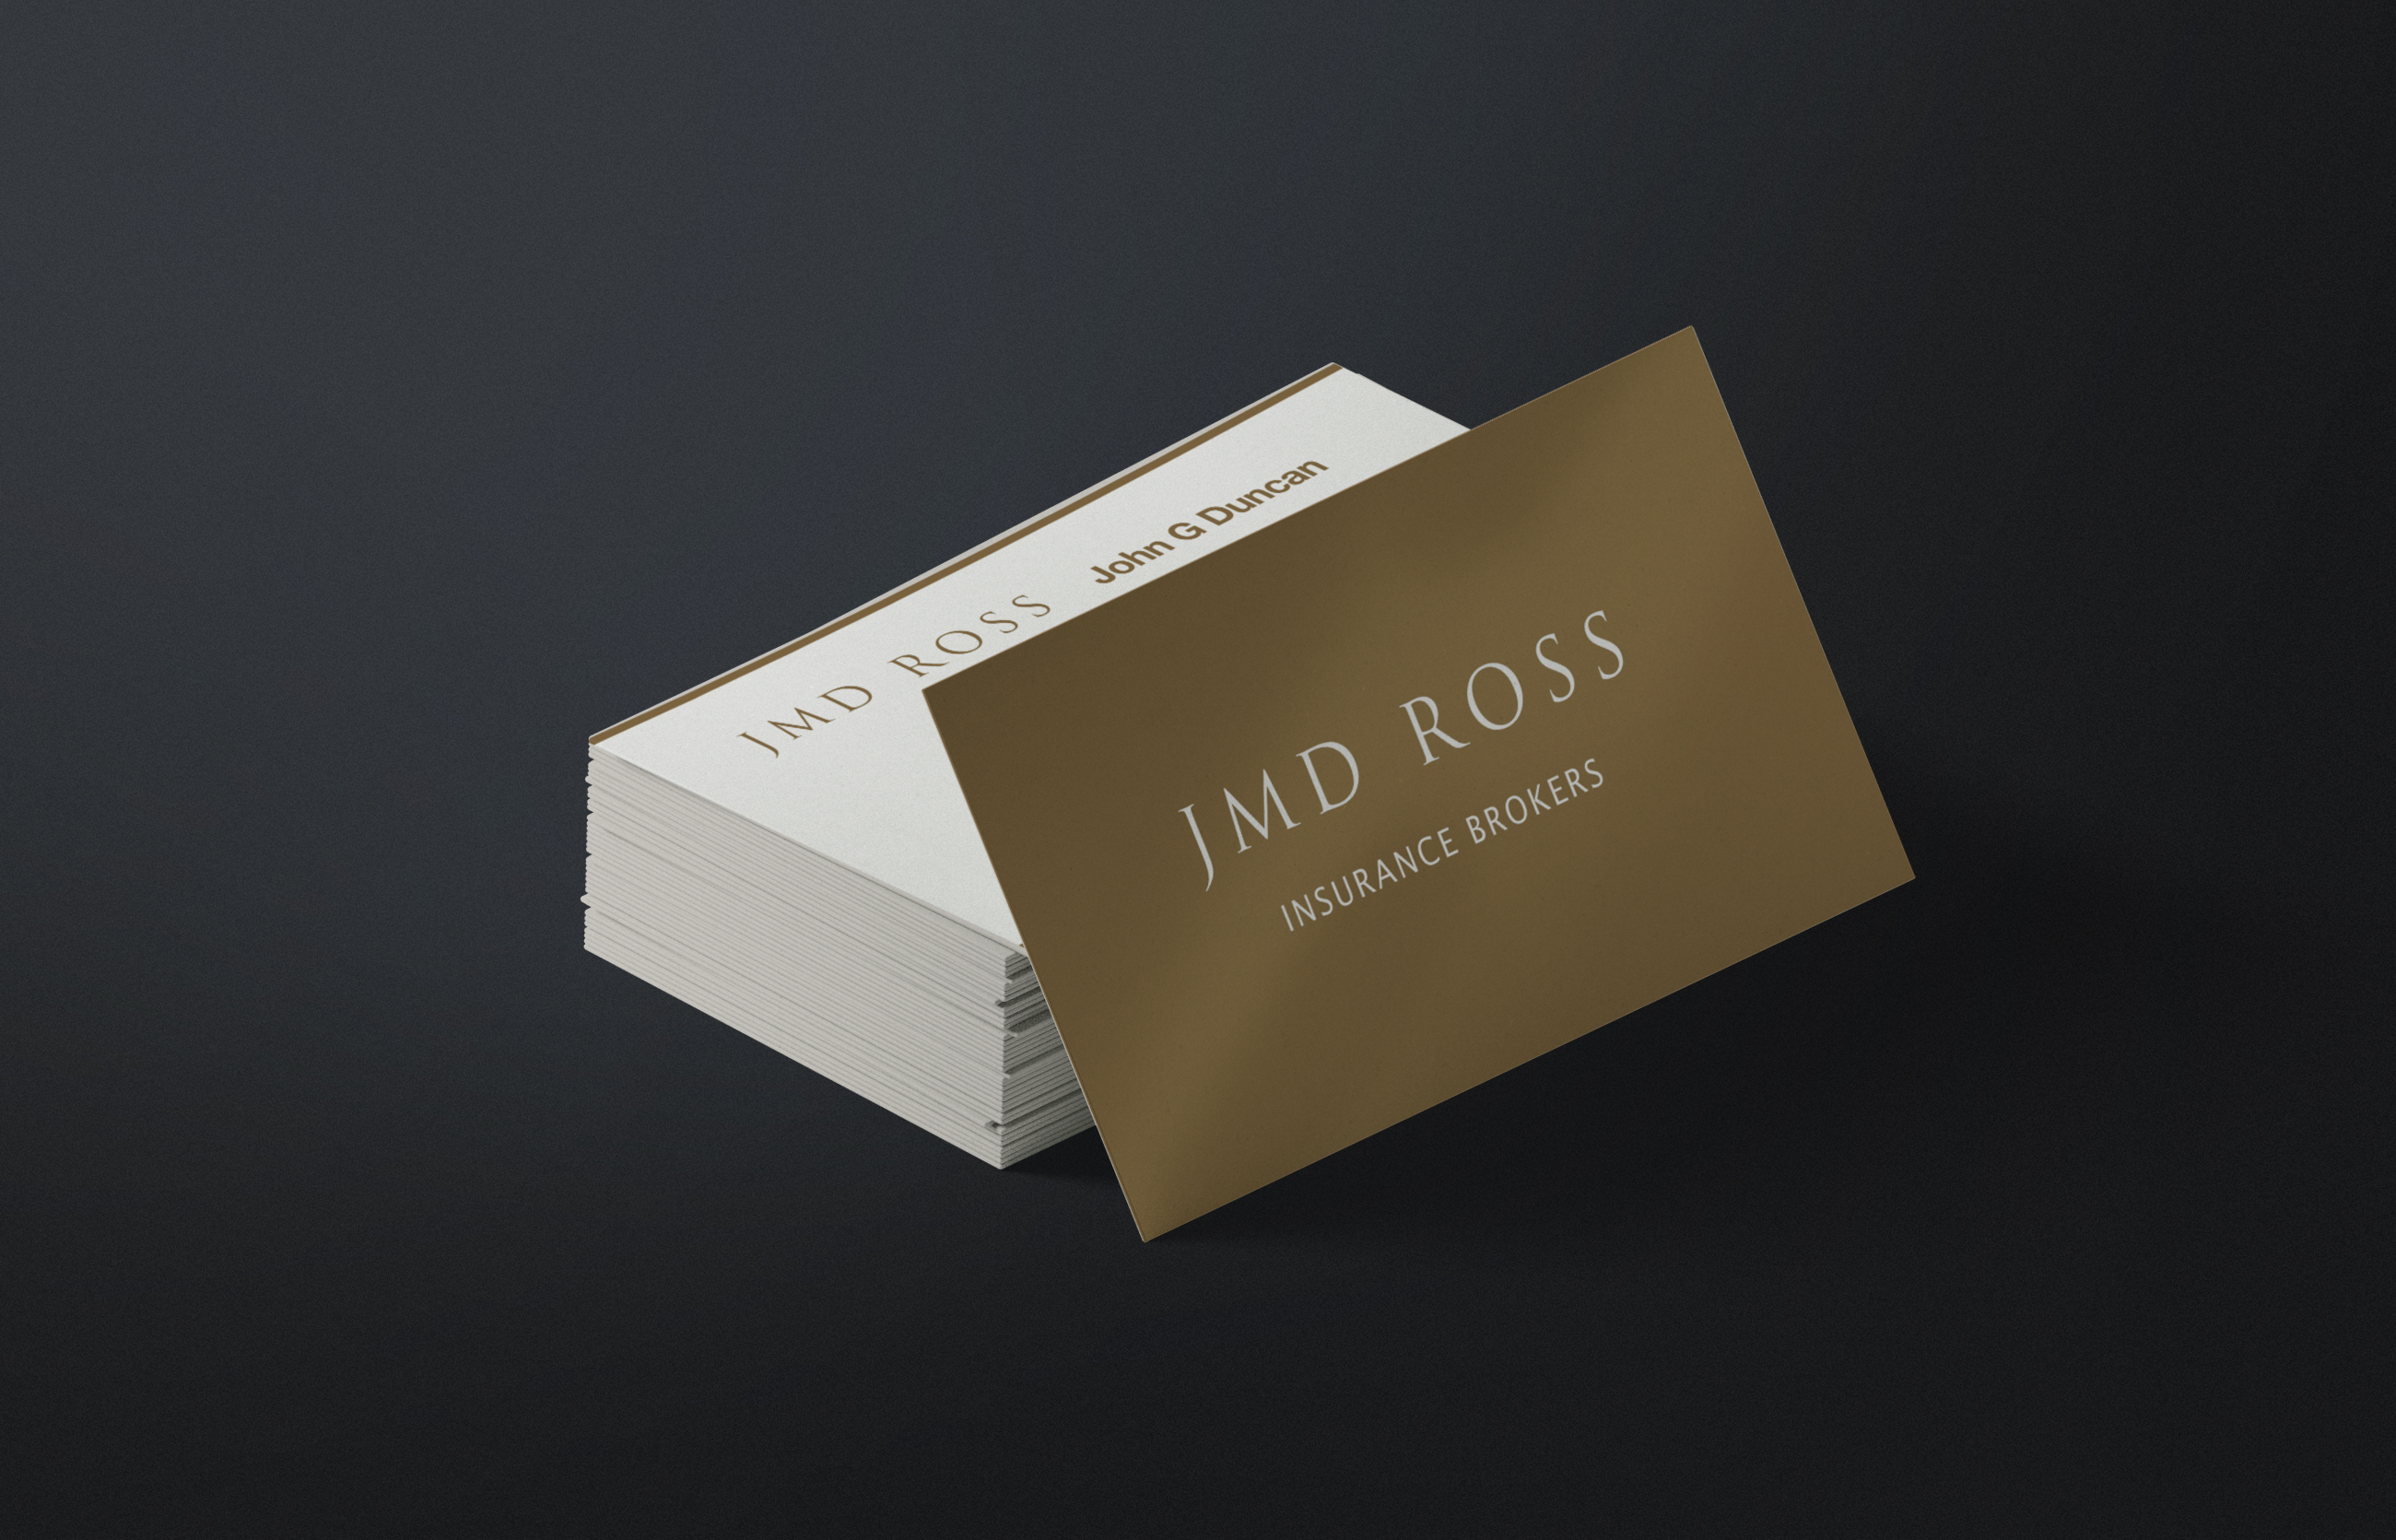 JMD Ross Insurance Brokers Business Cards